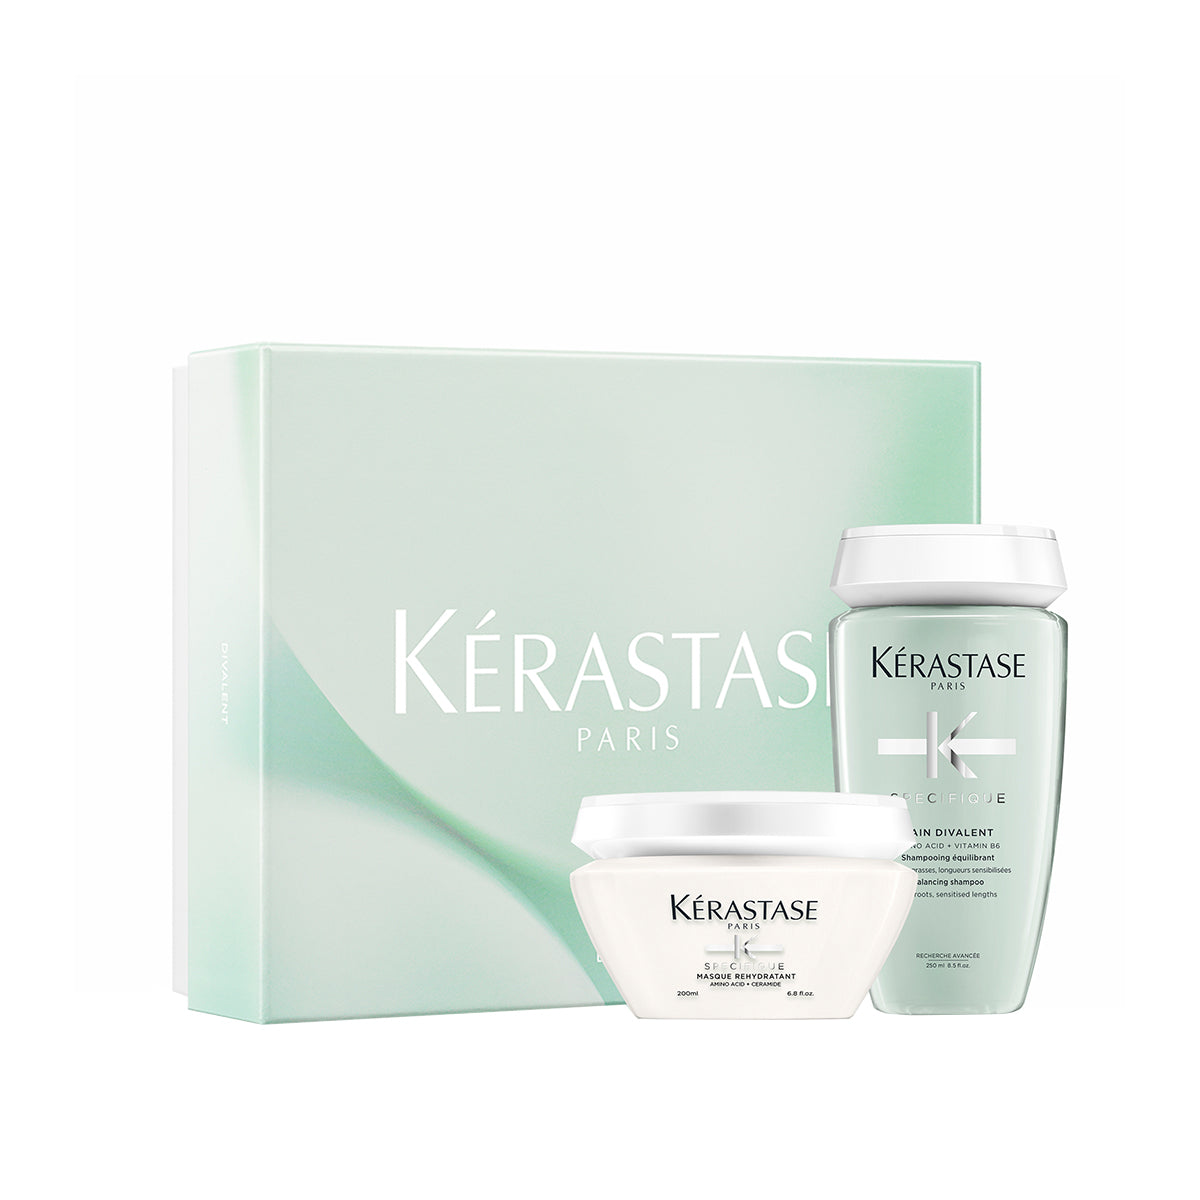 Kerastase Specifique Divalent Limited Edition Σετ Περιποίησης για Λιπαρά Μαλλιά (Σαμπουάν 250ml, Μάσκα 200ml)